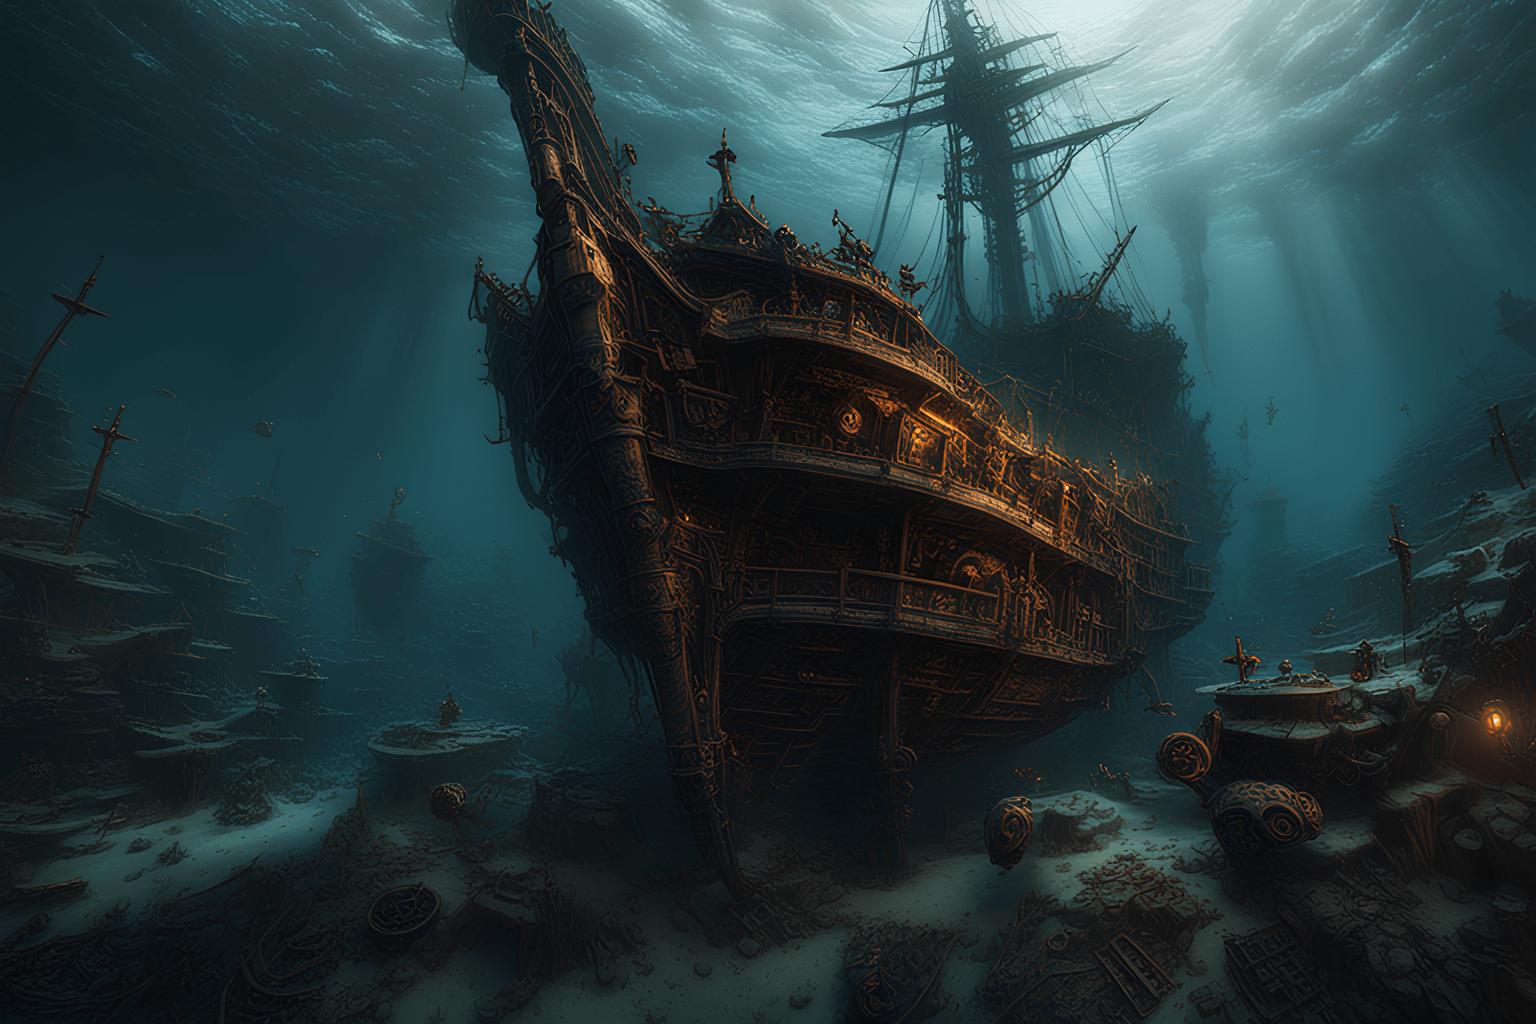 Shipwrecks Diving